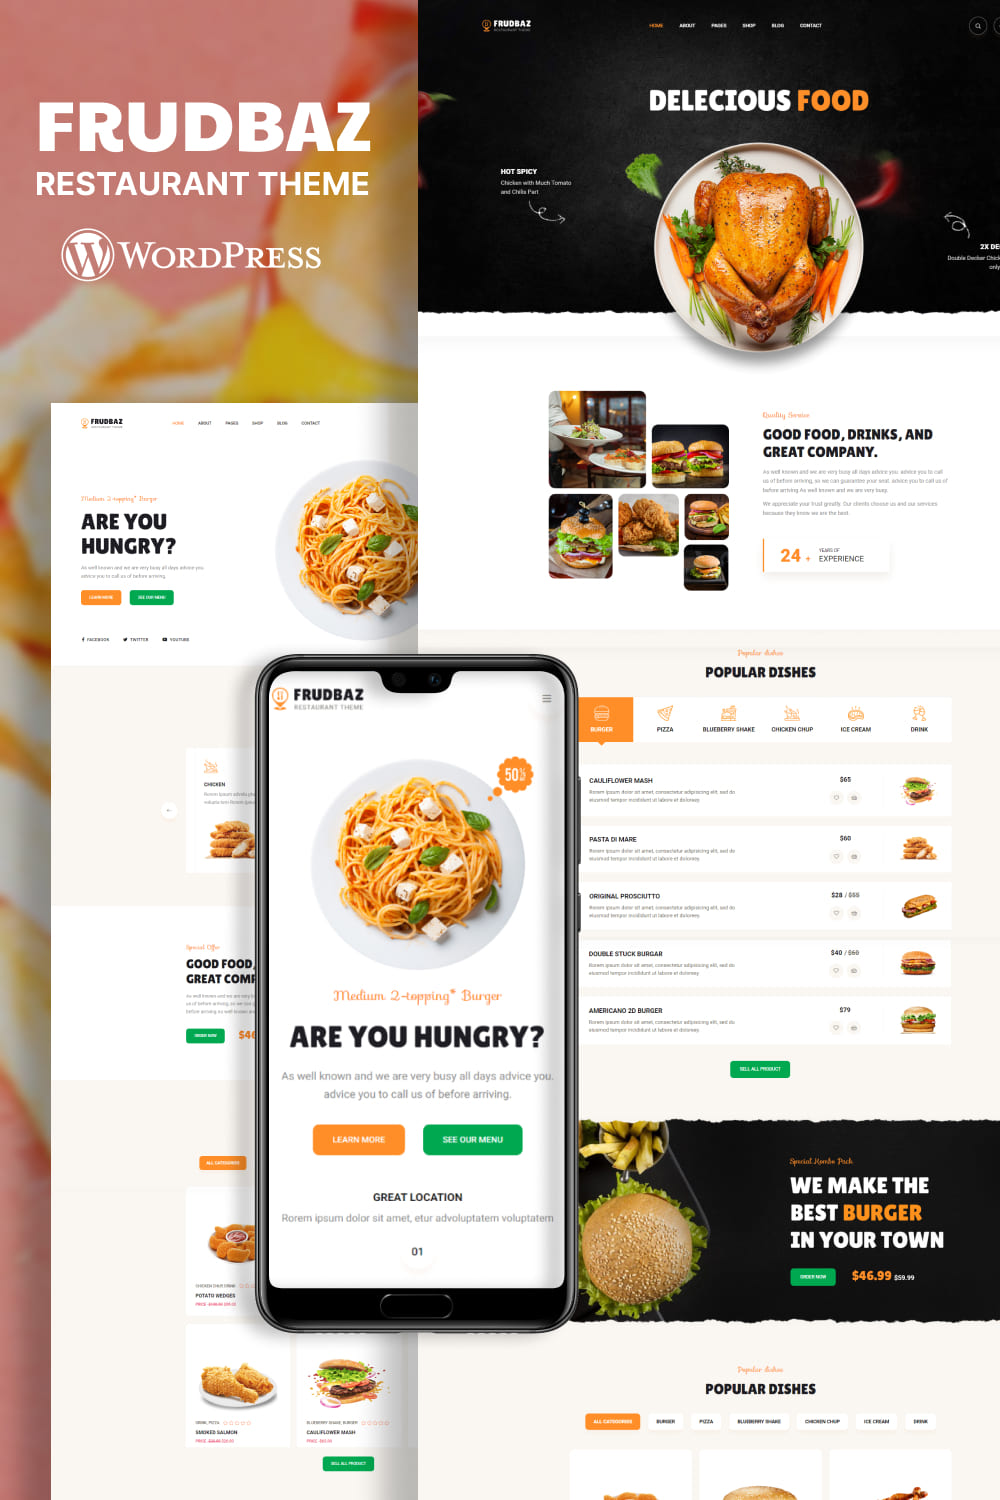 Preview Frudbaz - Restaurant WordPress Theme on the mobile.